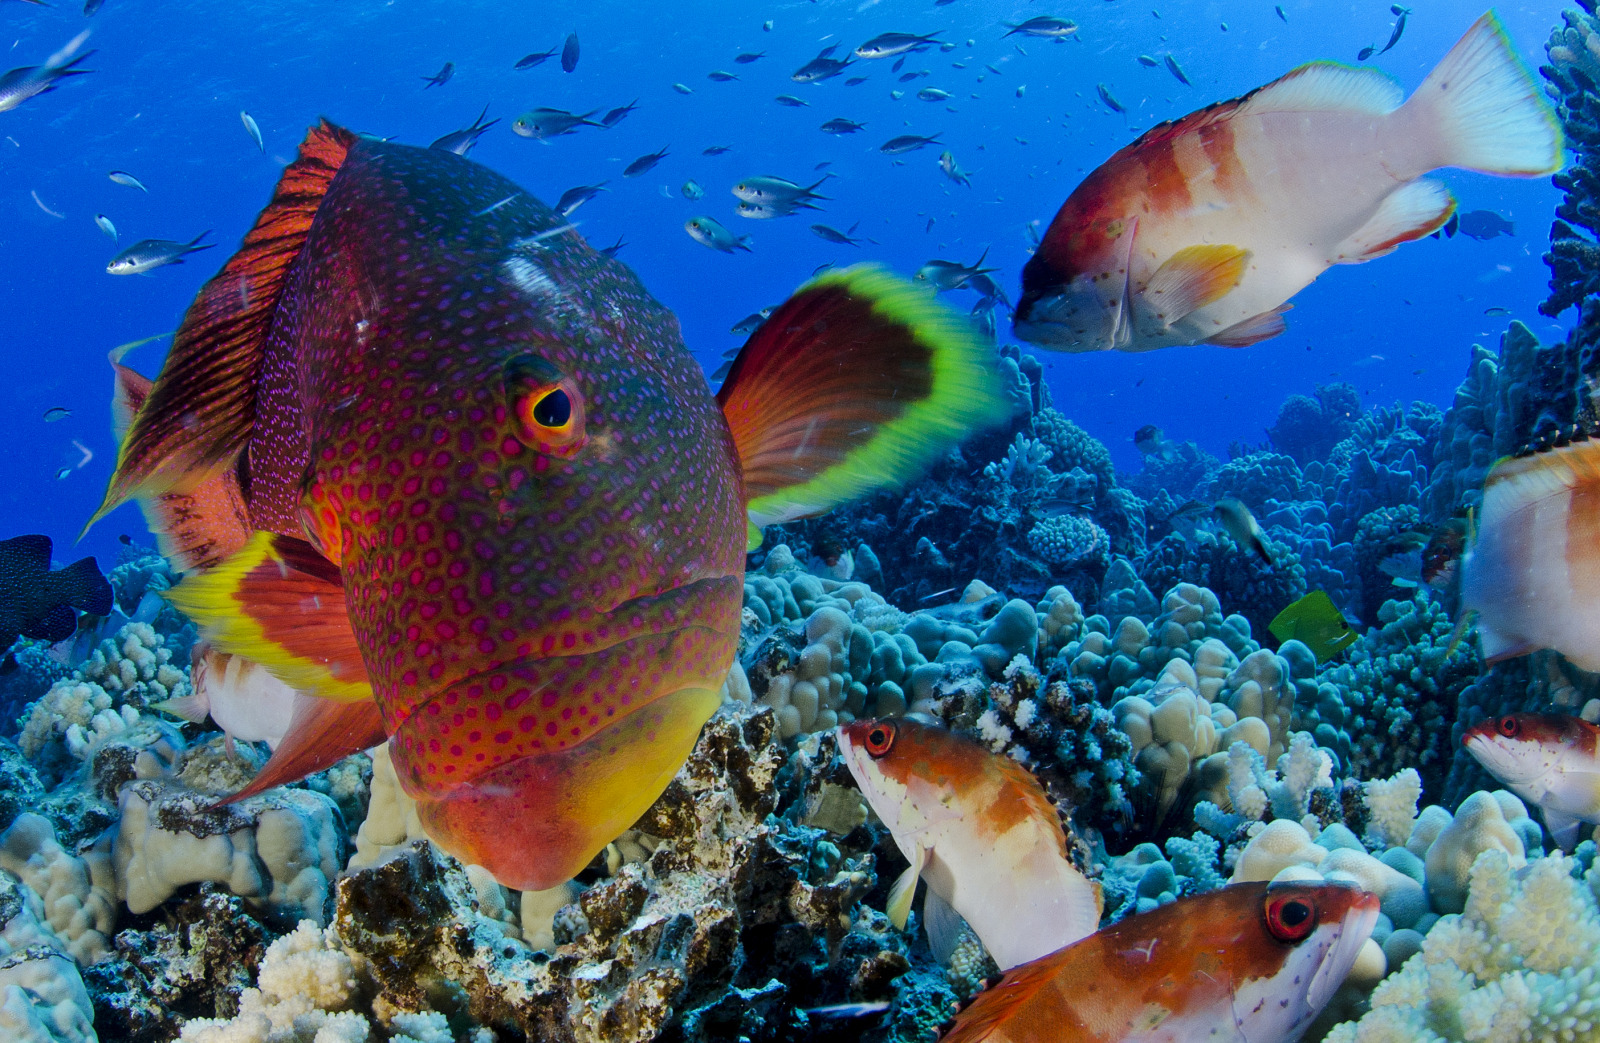 Pitcairn Island Fish 3, Enric Sala, National Geographic